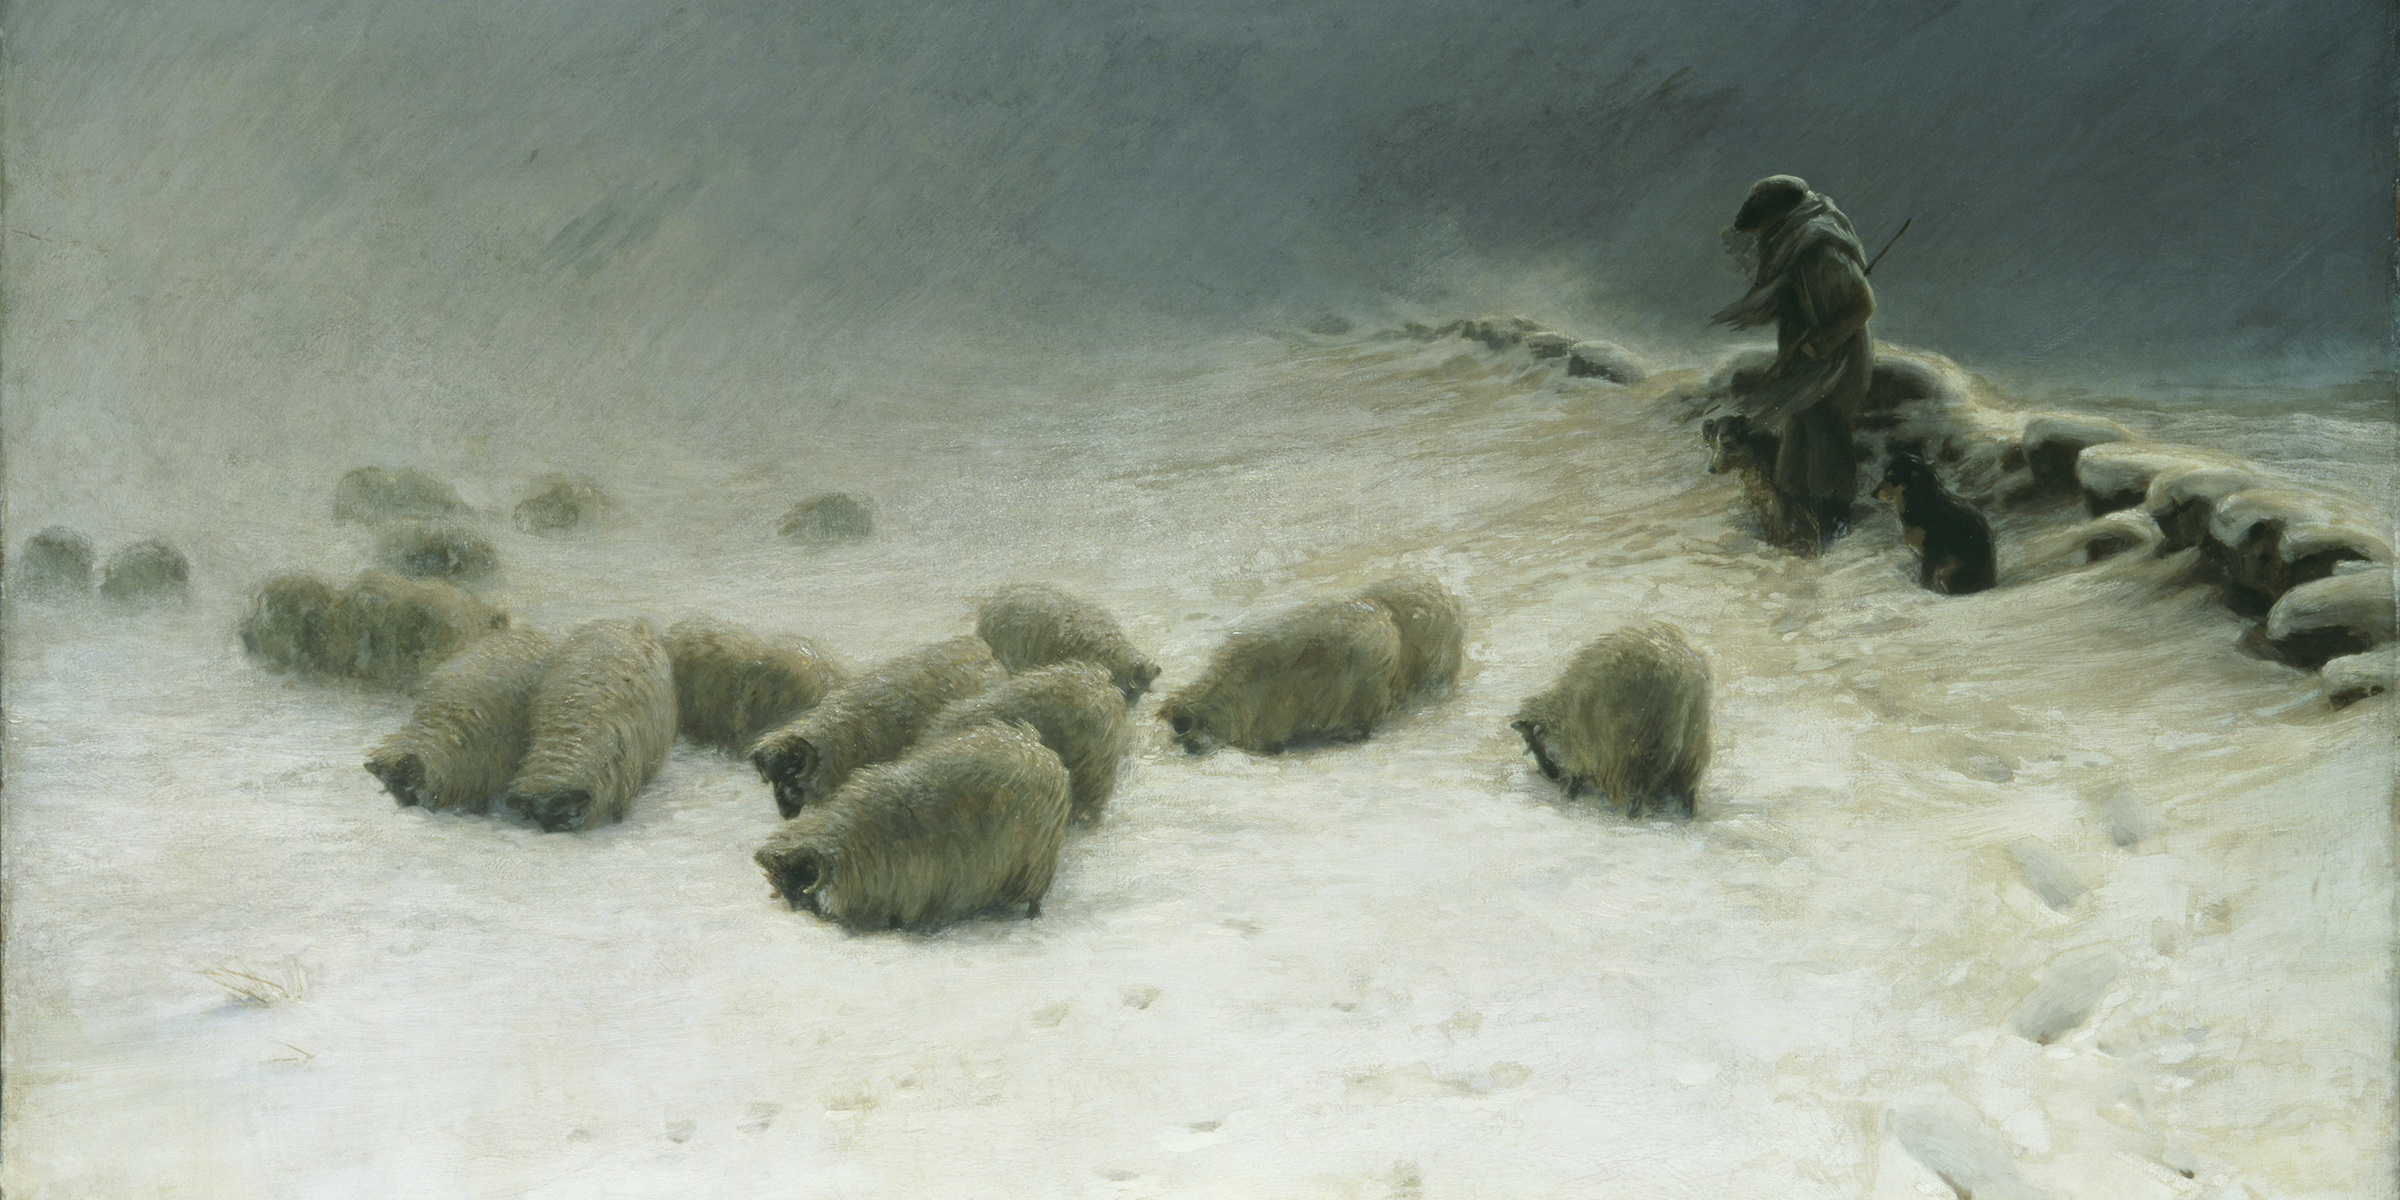 The Joyless Winter Day, by Joseph Farquharson, 1883. © Tate, London / Art Resource, NY.